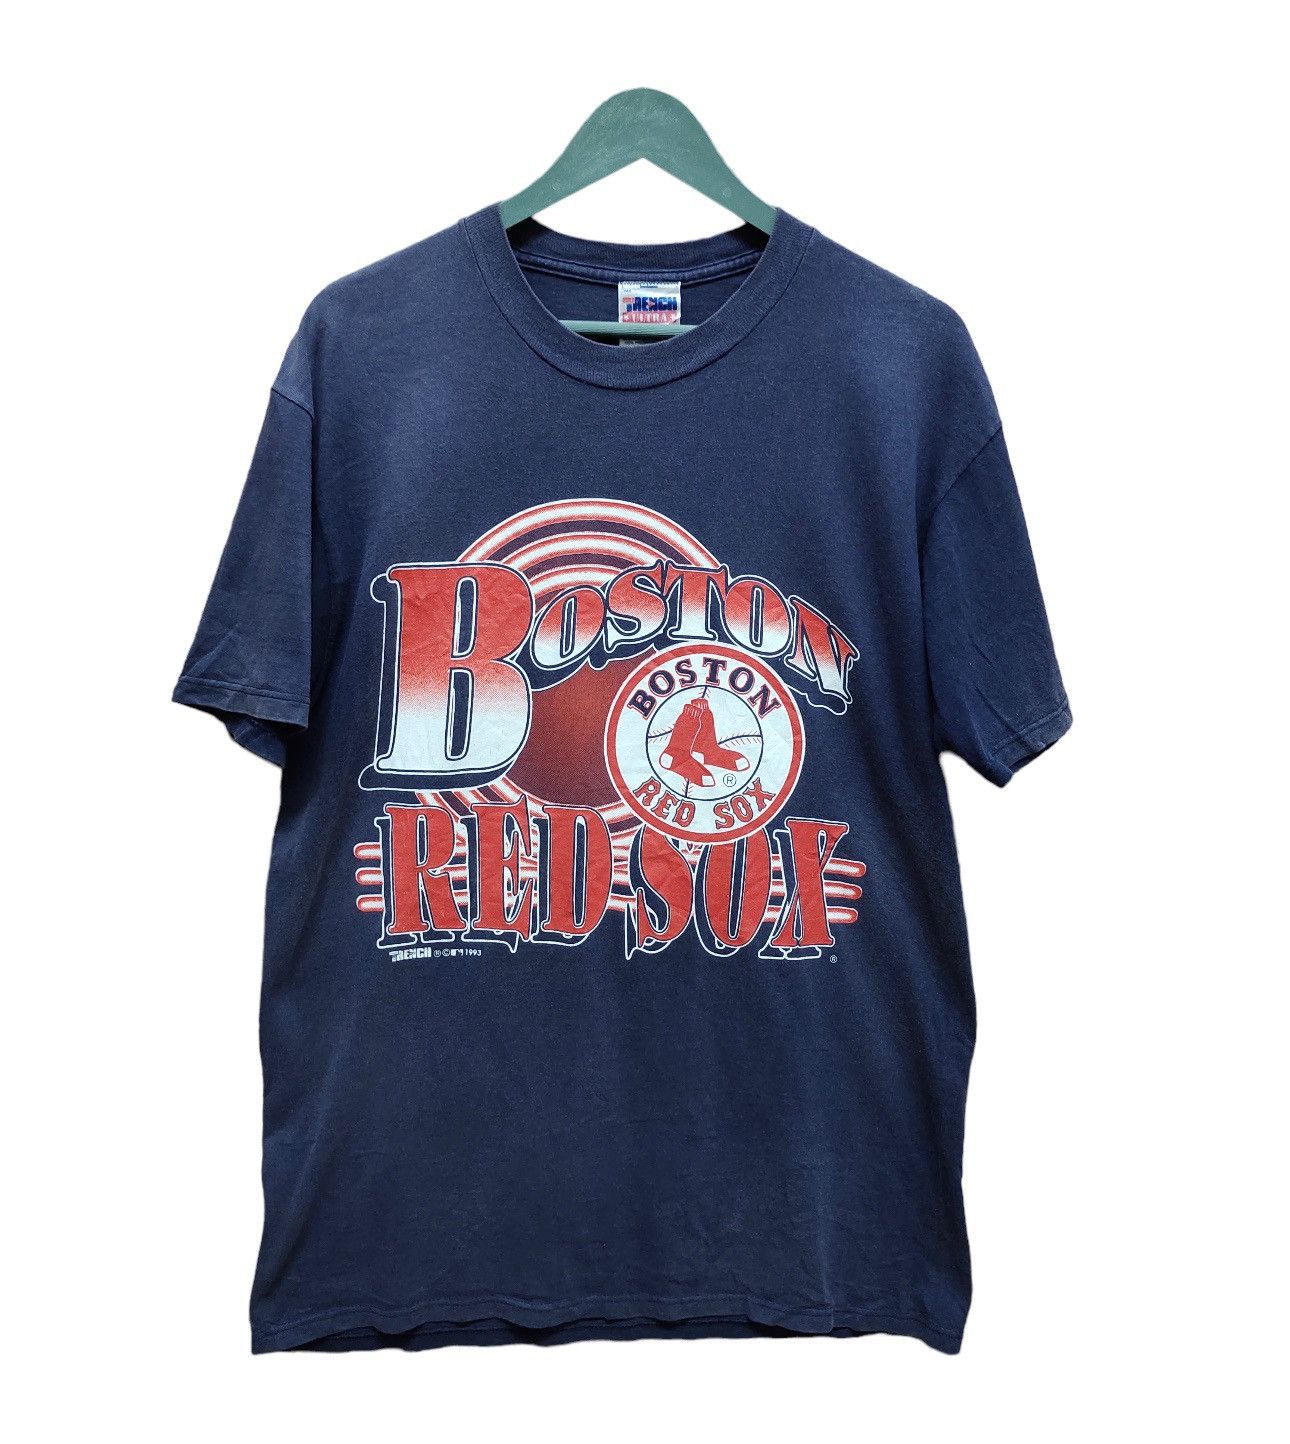 1997 Vintage Boston Red Sox T-Shirt